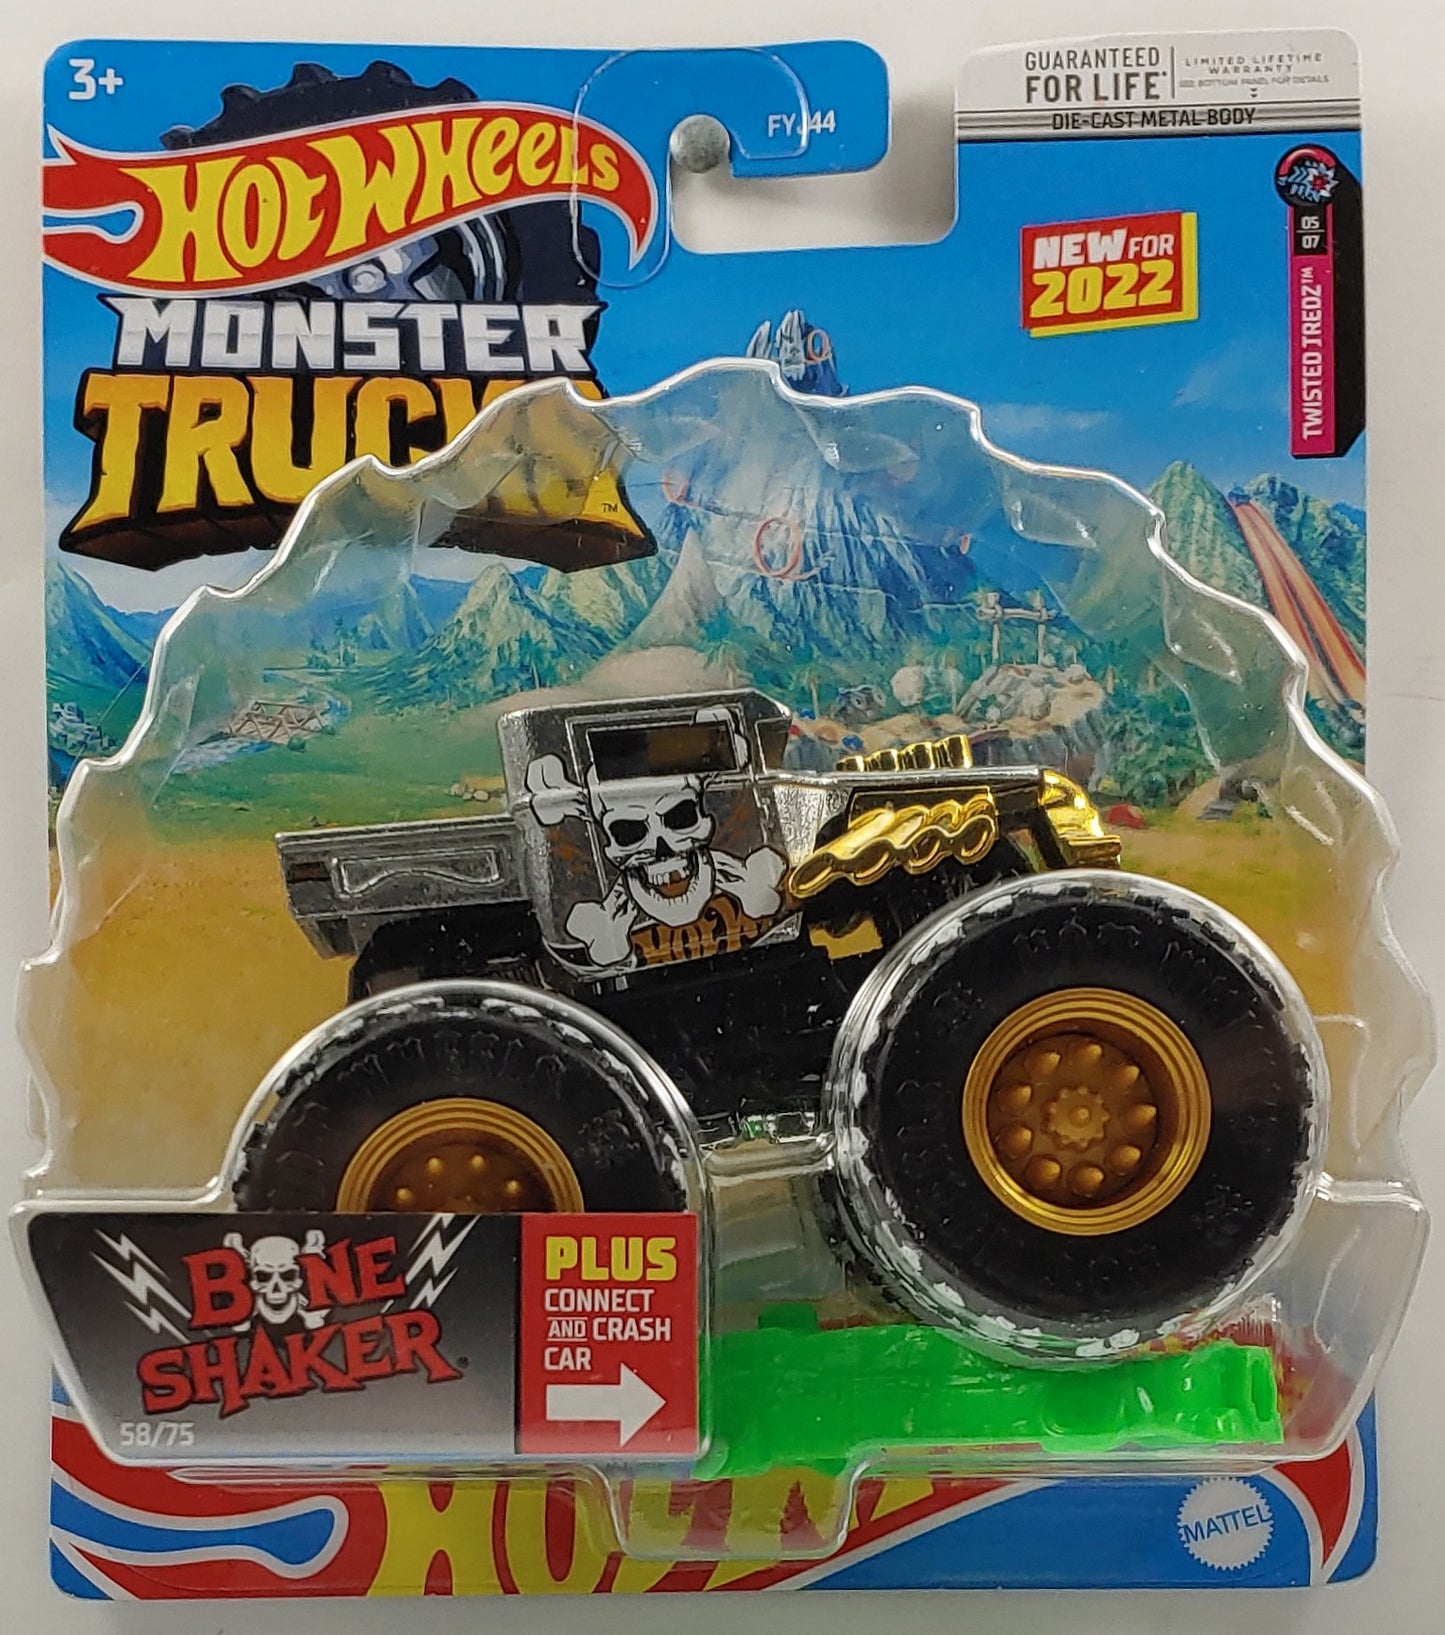 Hot Wheels 2022 - Monster Trucks 58/75 - Twisted Treads 05/07 - Bone Shaker - ZAMAC - Plus Connect and Crash Car